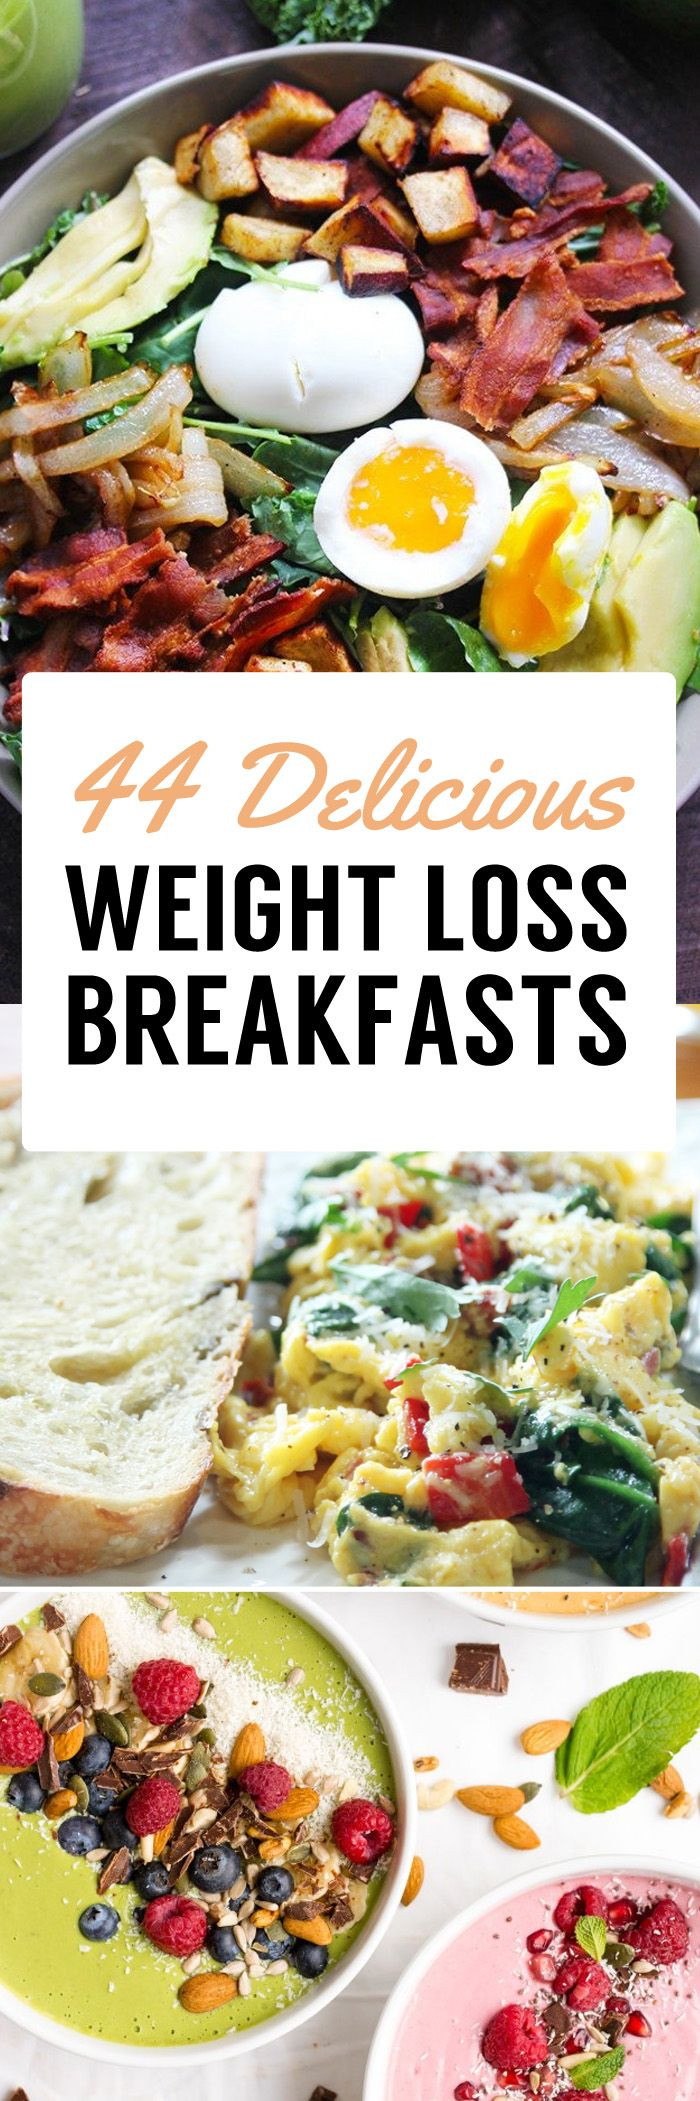 Healthy On The Go Breakfast For Weight Loss
 Best 25 Healthy breakfasts ideas on Pinterest